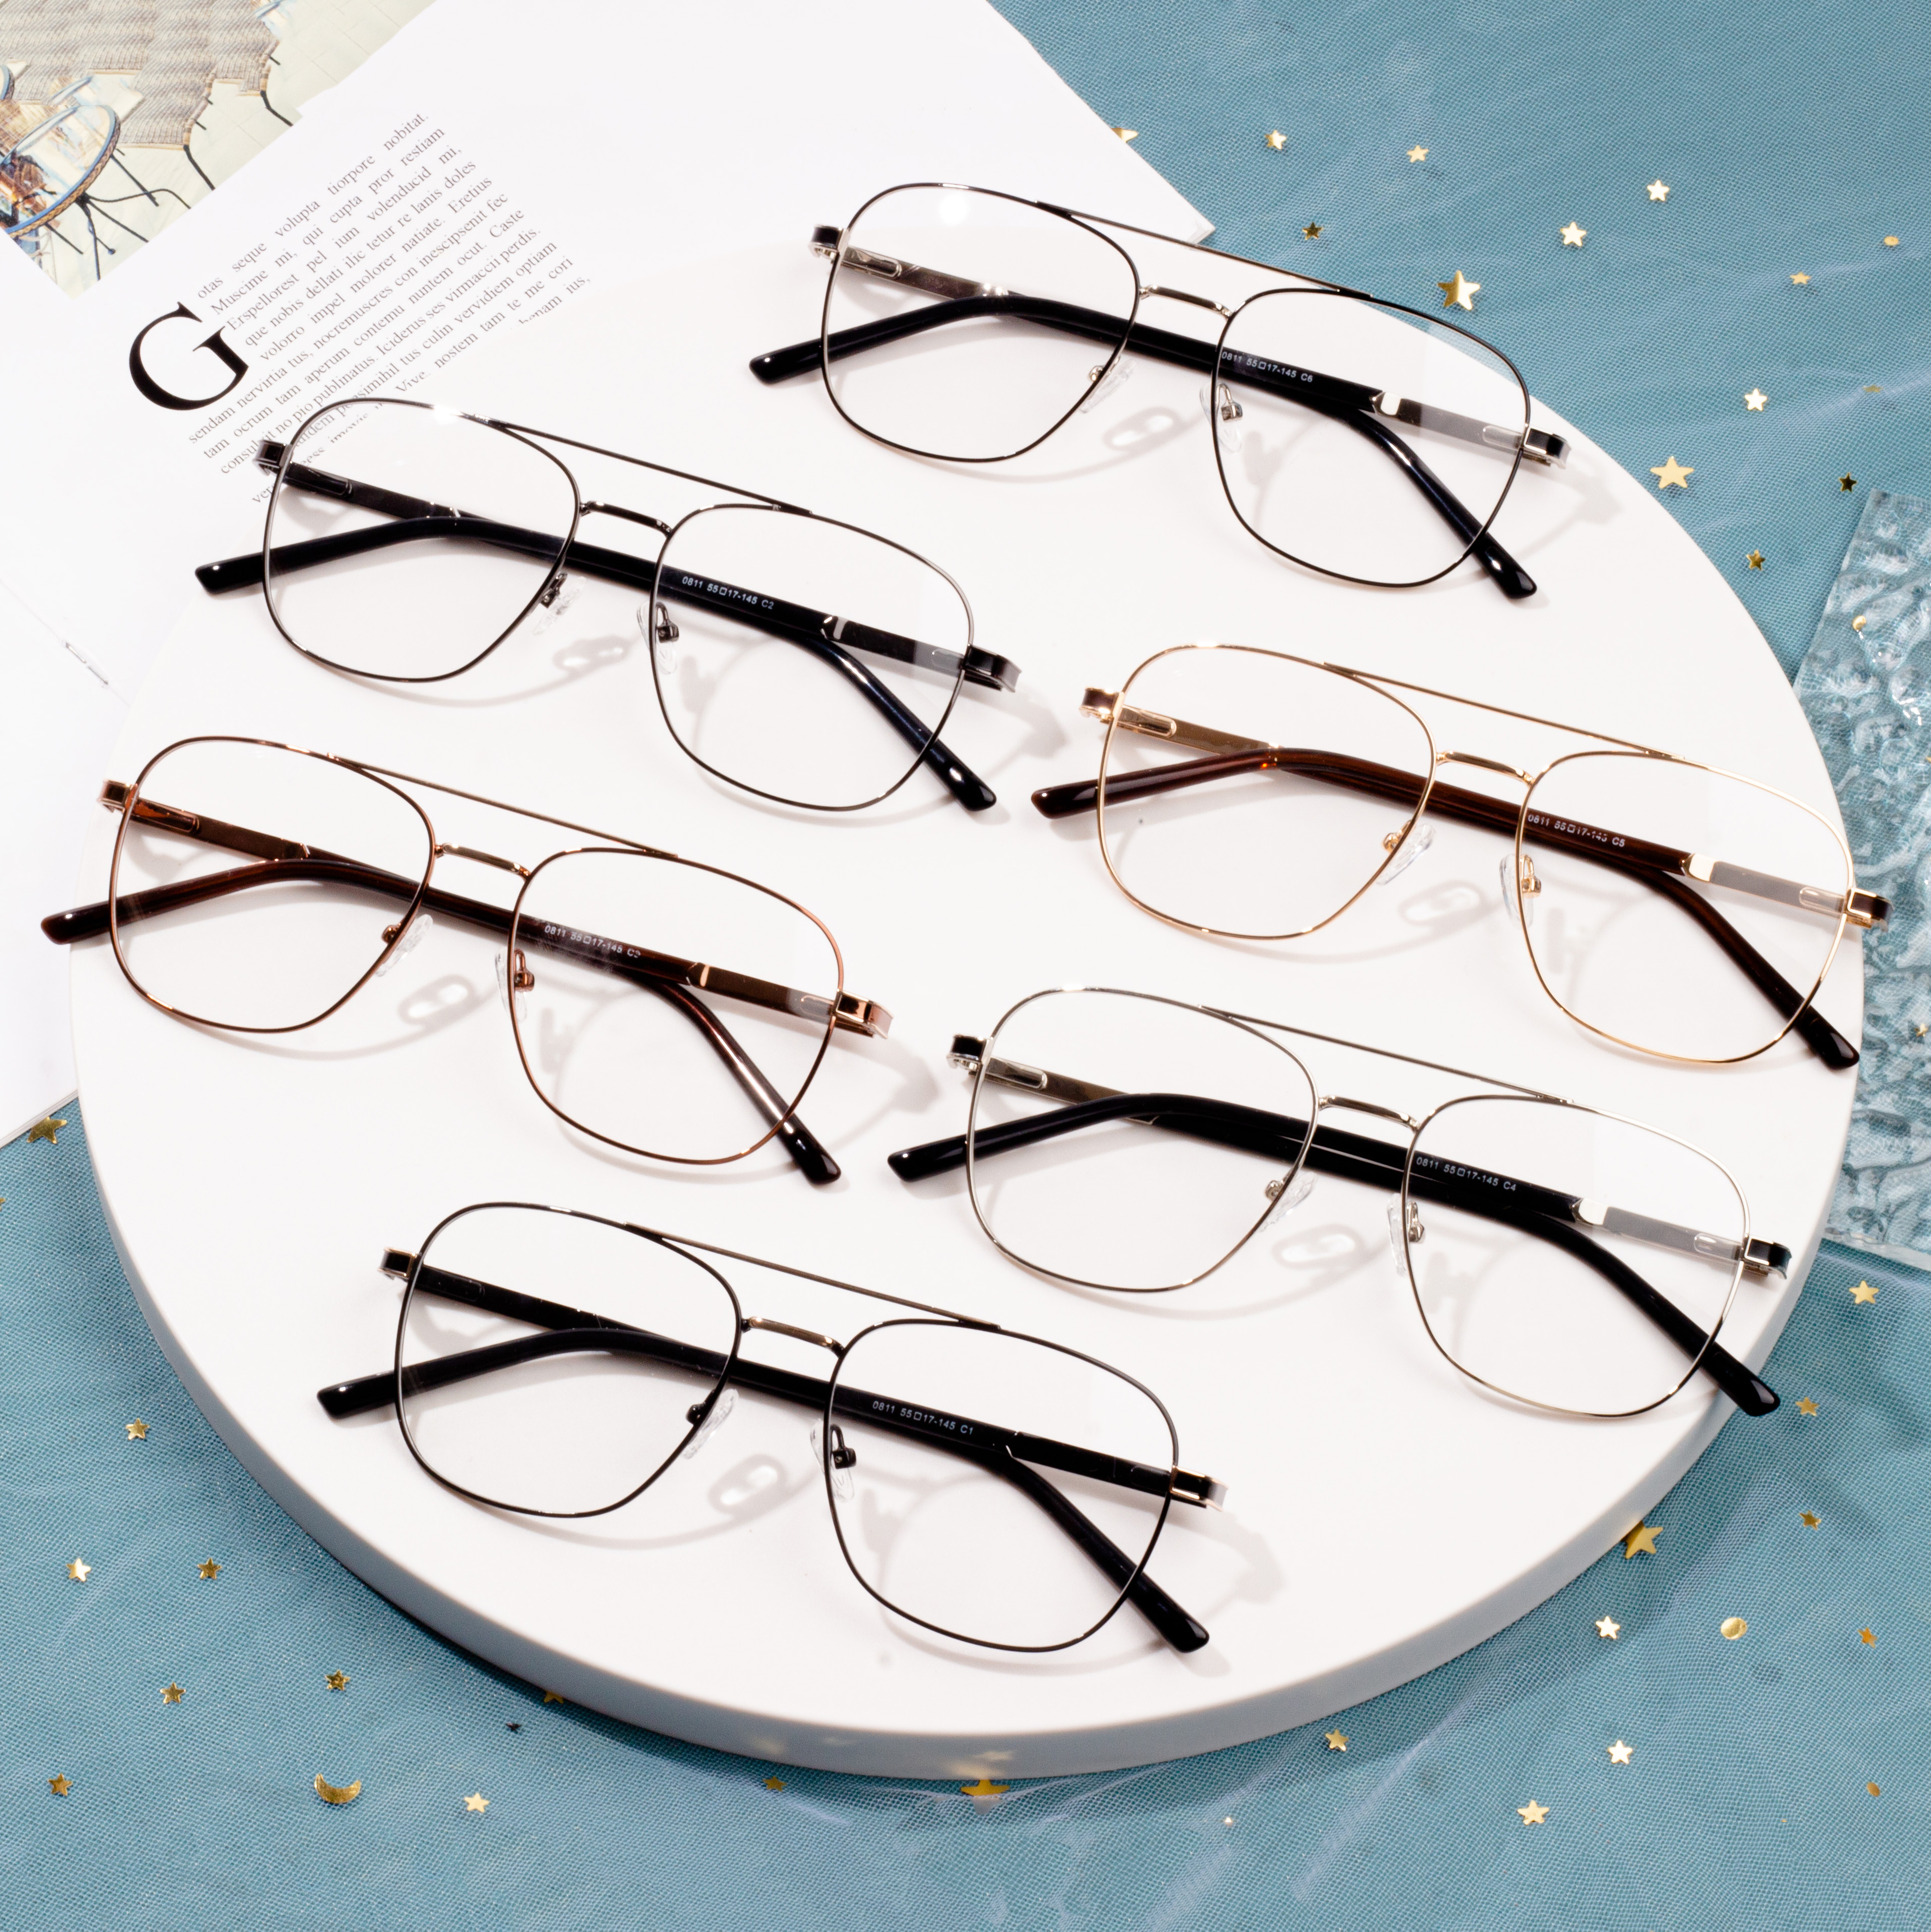 8 Year Exporter Eyewear Frames - Hot Sales Square Frames Eyeglass – HJ EYEWEAR